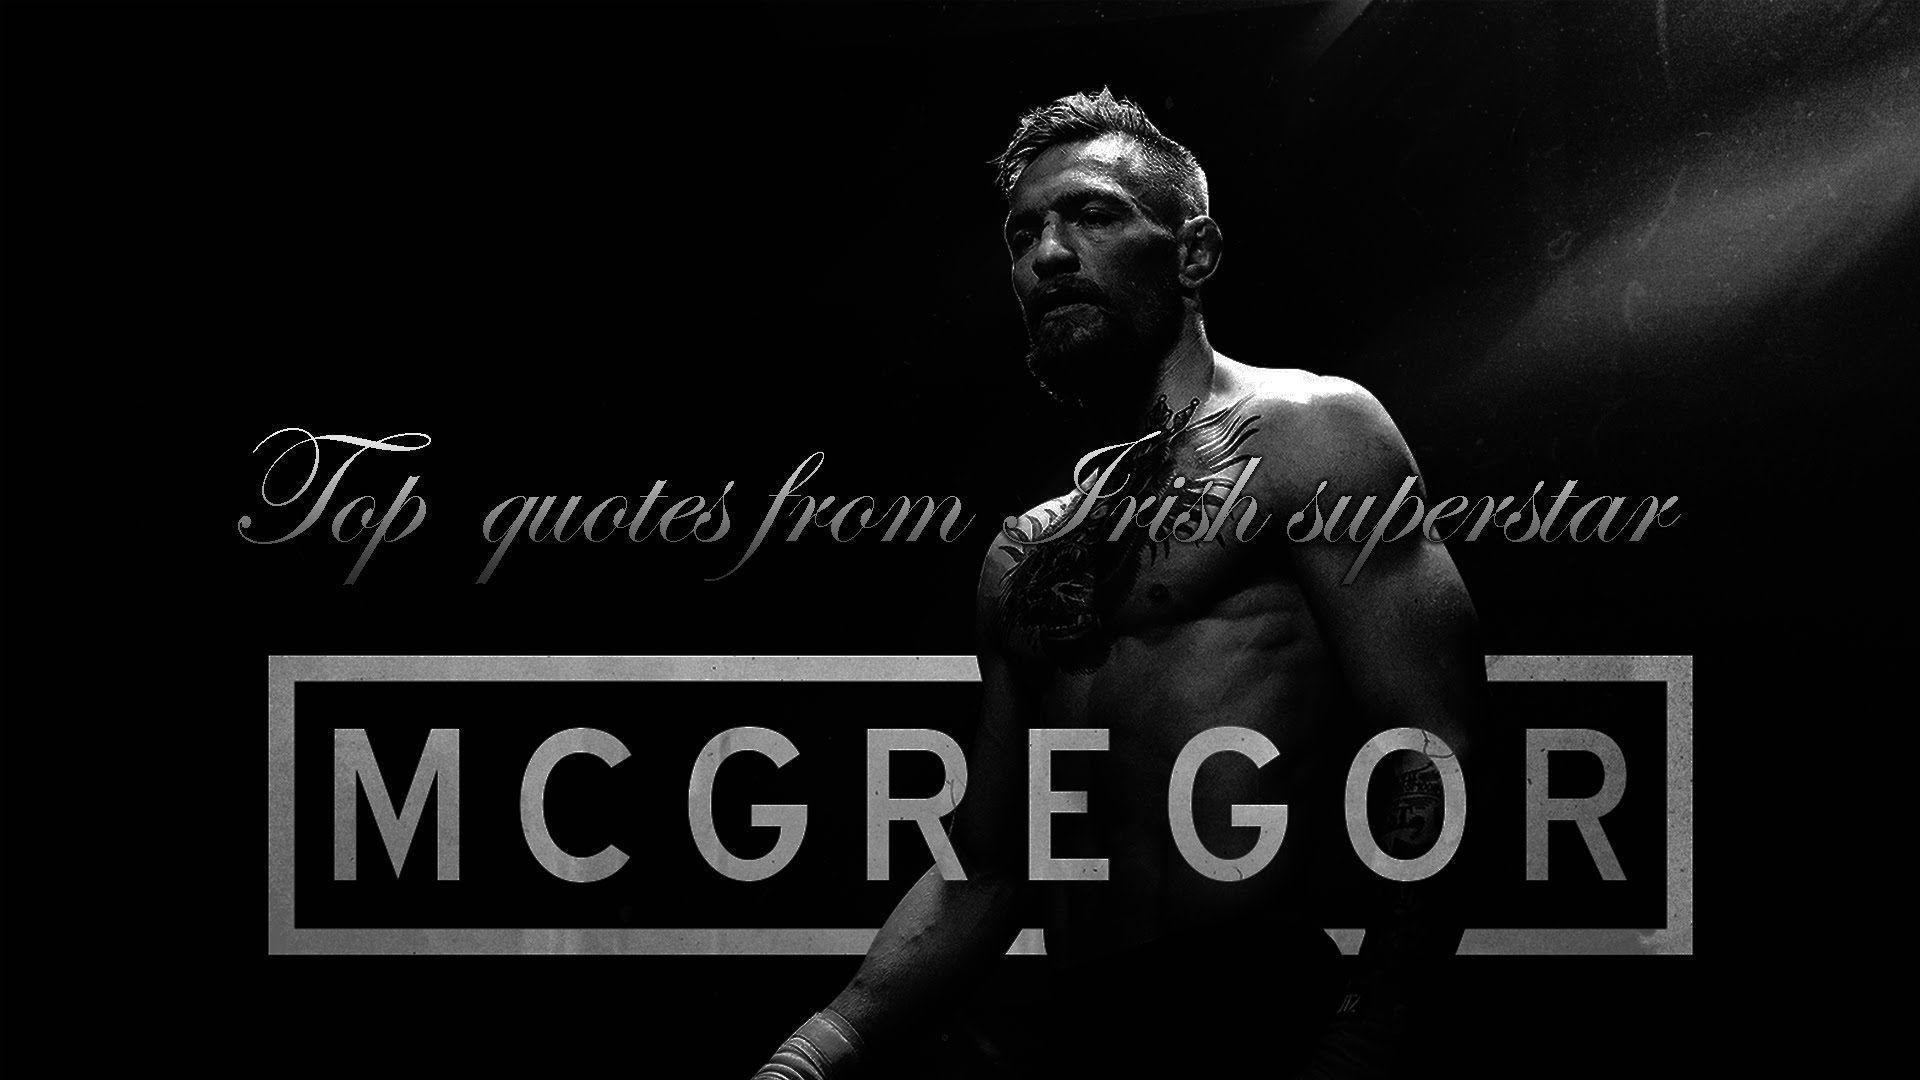 Mcgregor Wallpapers - Notorious Conor Mcgregor Quotes - 1920x1080 Wallpaper  